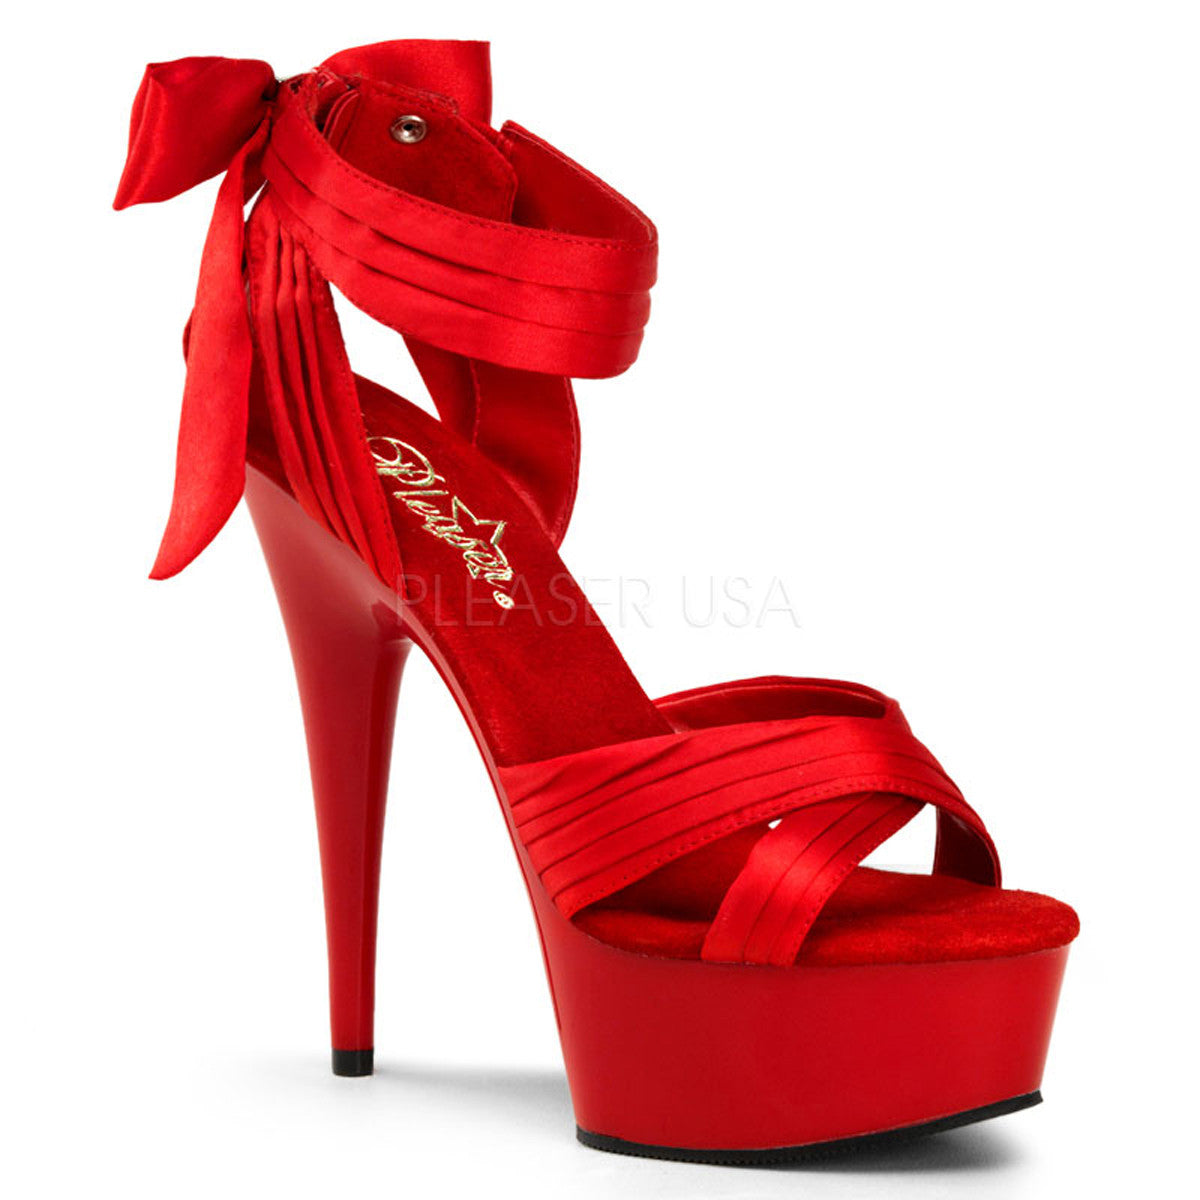 PLEASER DELIGHT-668 Red Satin-Red Sandals - Shoecup.com